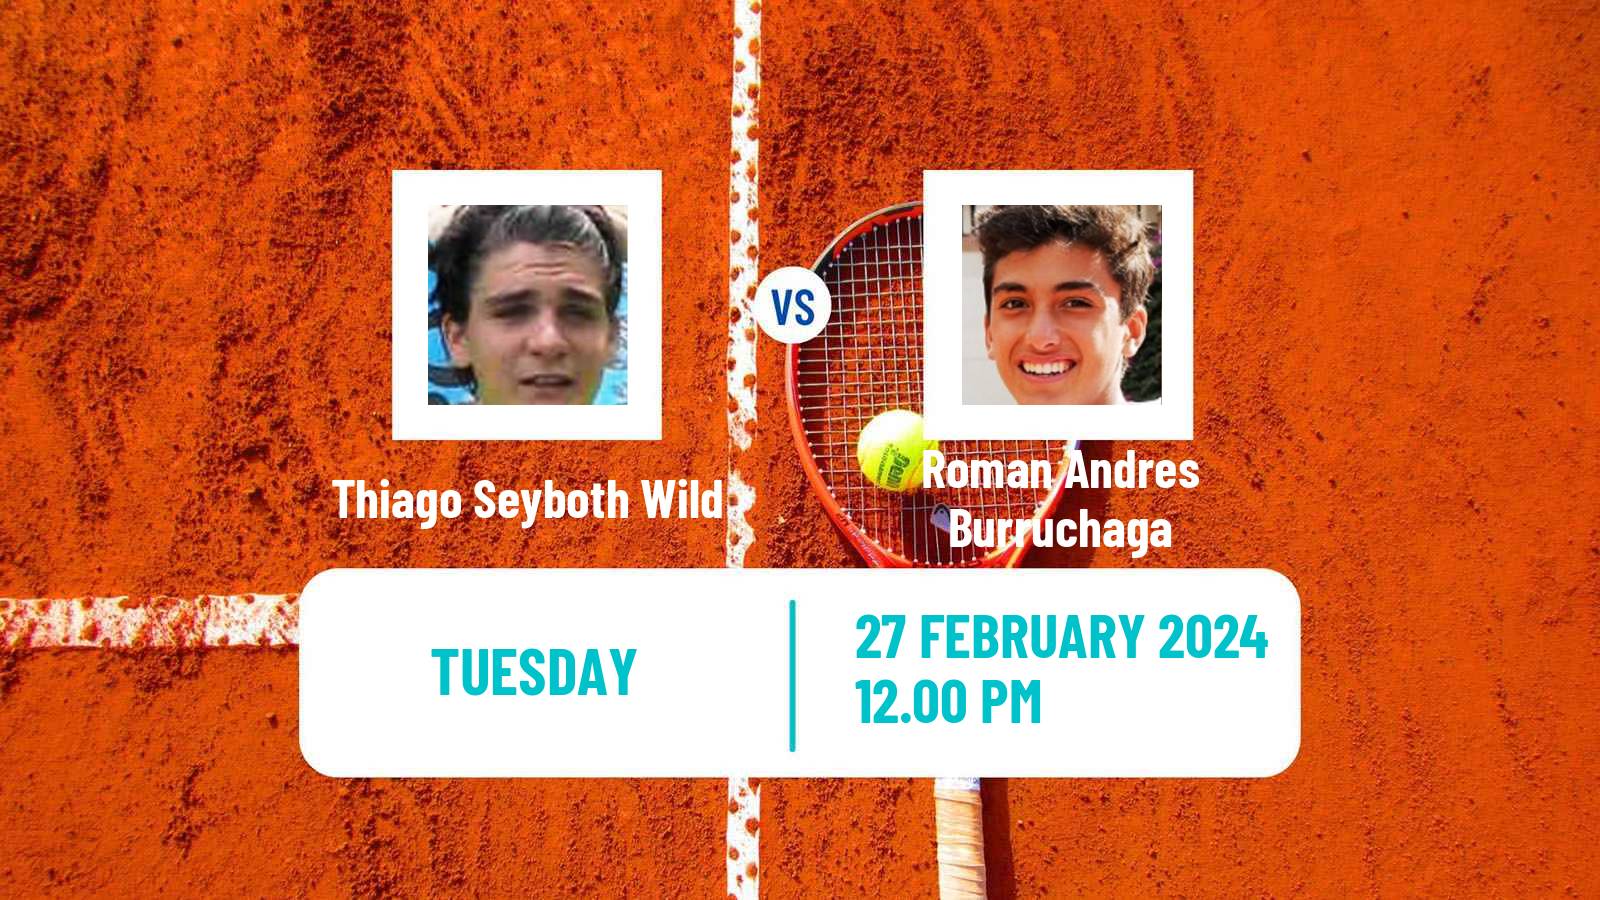 Tennis ATP Santiago Thiago Seyboth Wild - Roman Andres Burruchaga